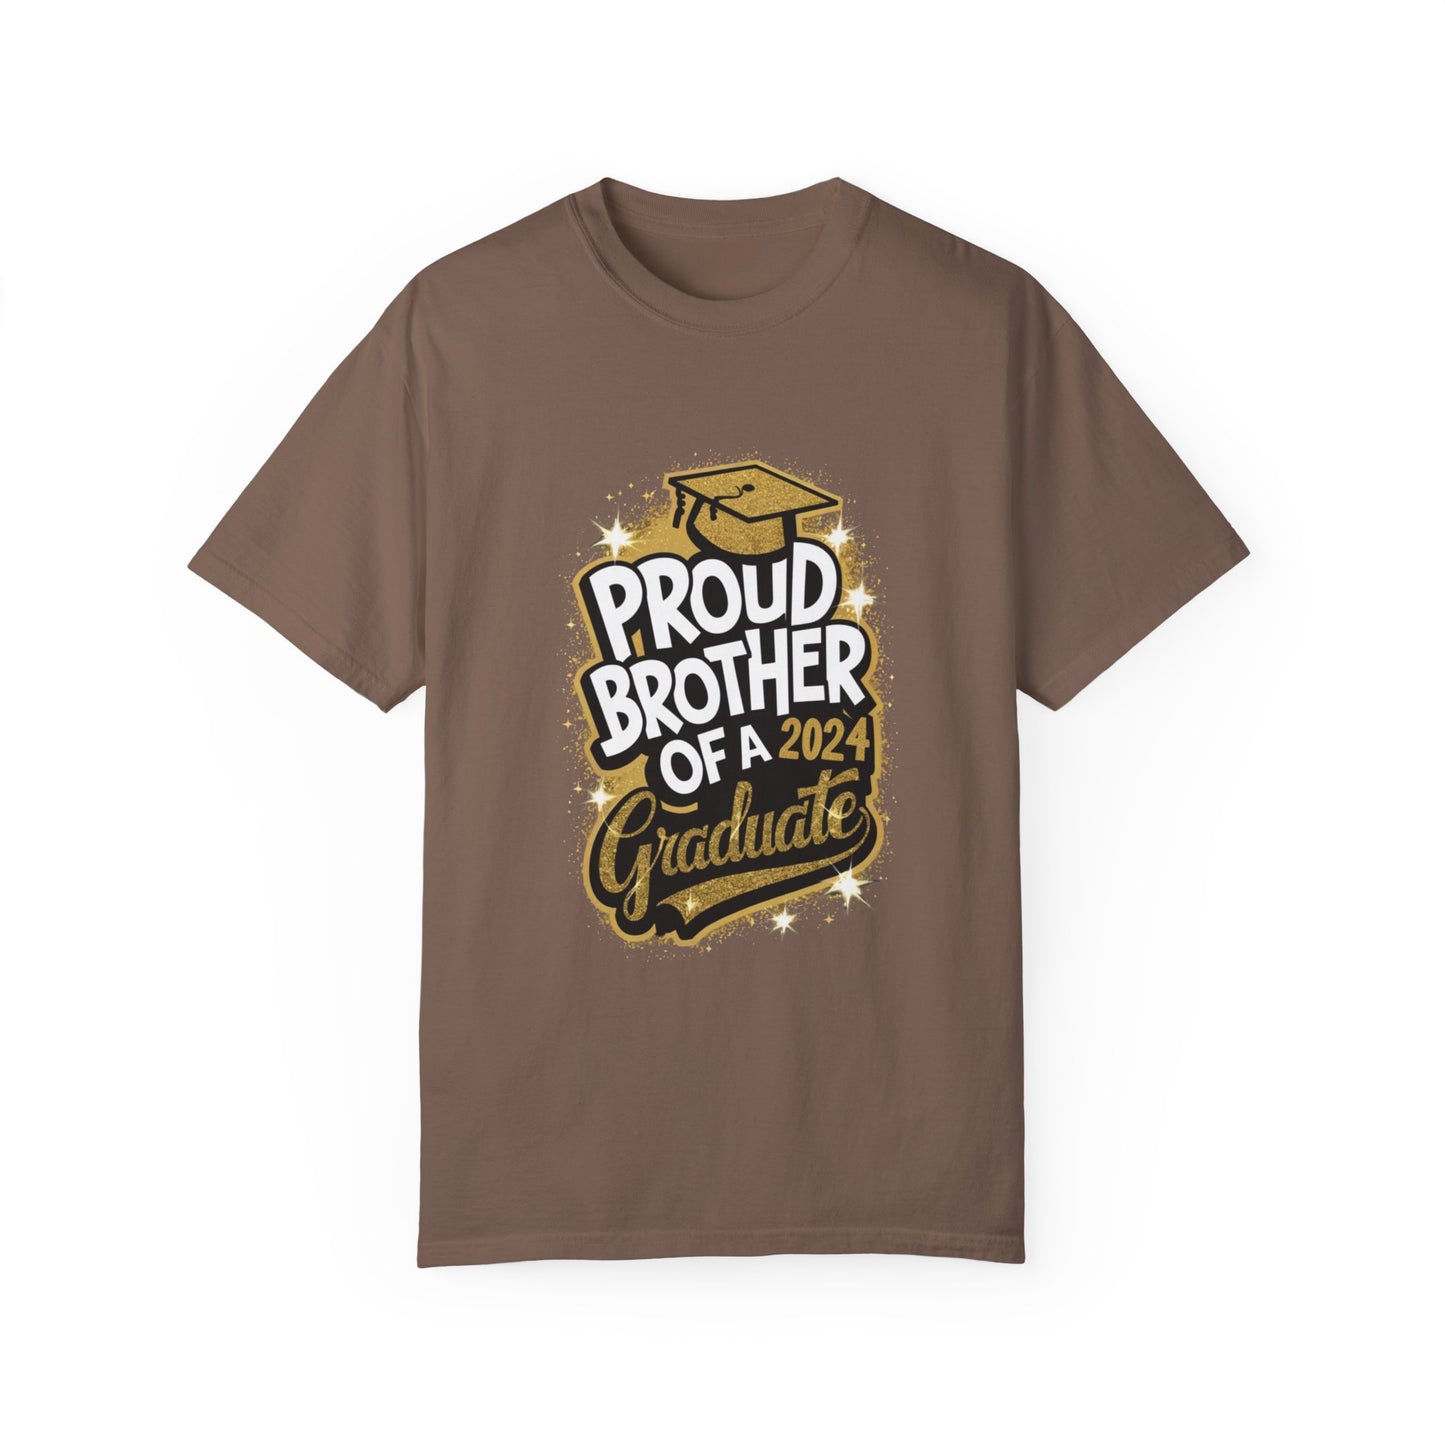 Proud Brother of a 2024 Graduate Unisex Garment-dyed T-shirt Cotton Funny Humorous Graphic Soft Premium Unisex Men Women Espresso T-shirt Birthday Gift-15